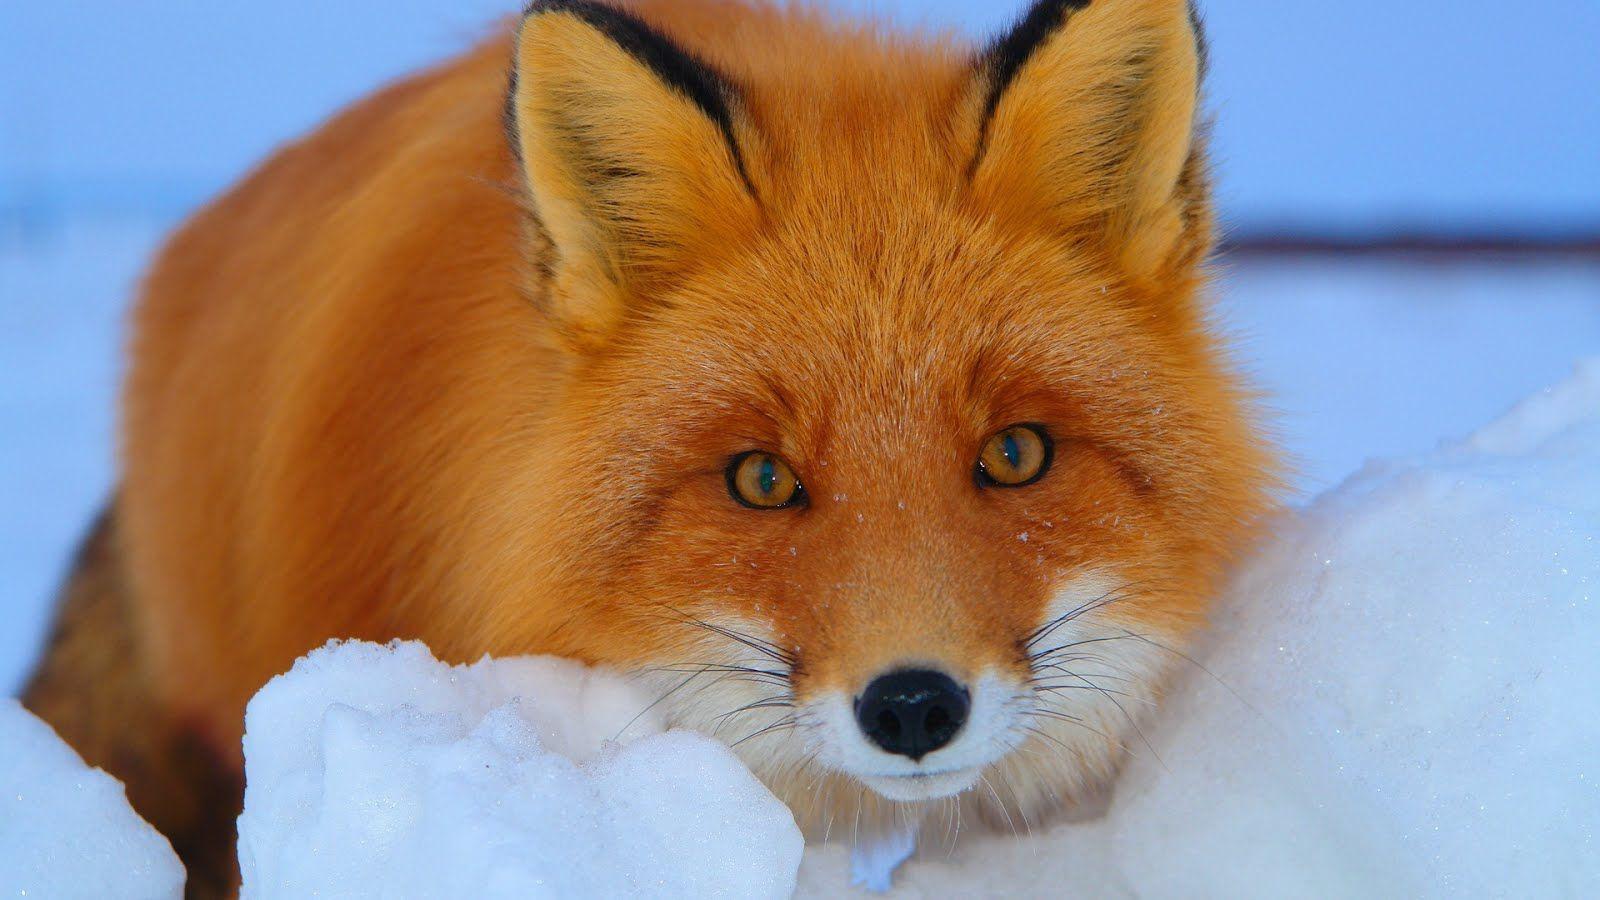 Free Wallpaper 1920x1080 HDTV: Red fox in snow